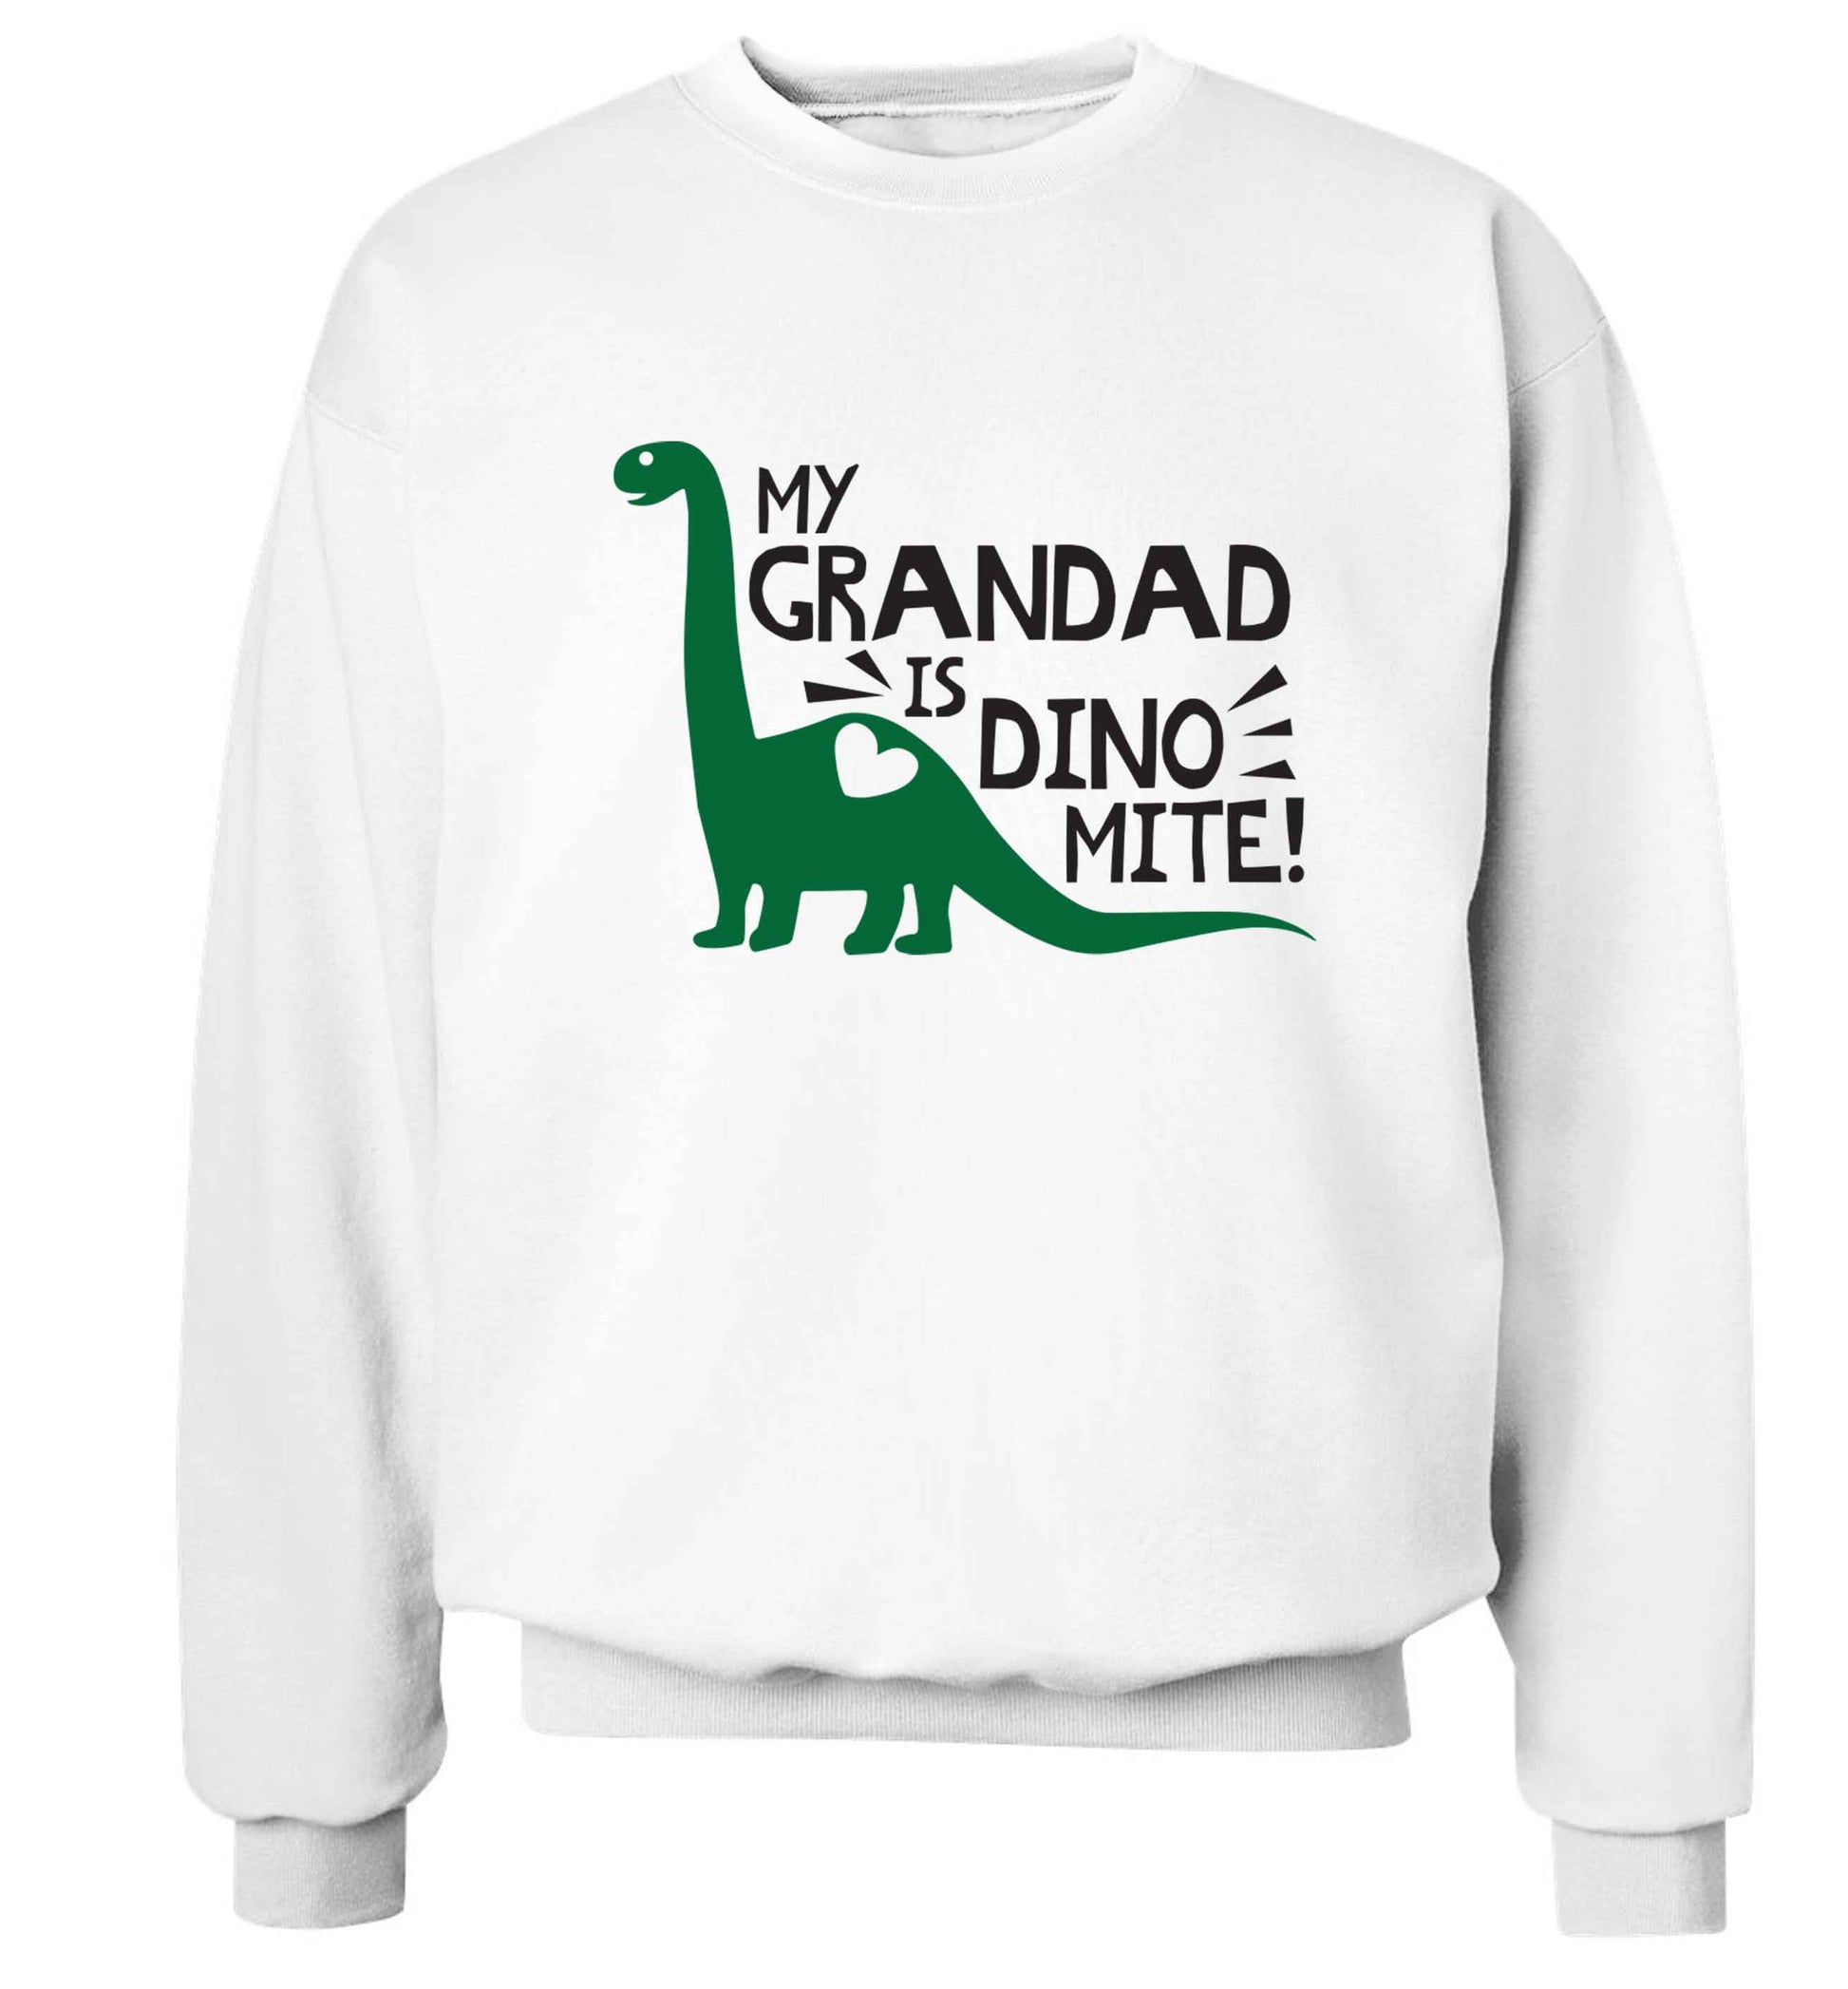 My grandad is dinomite! Adult's unisex white Sweater 2XL